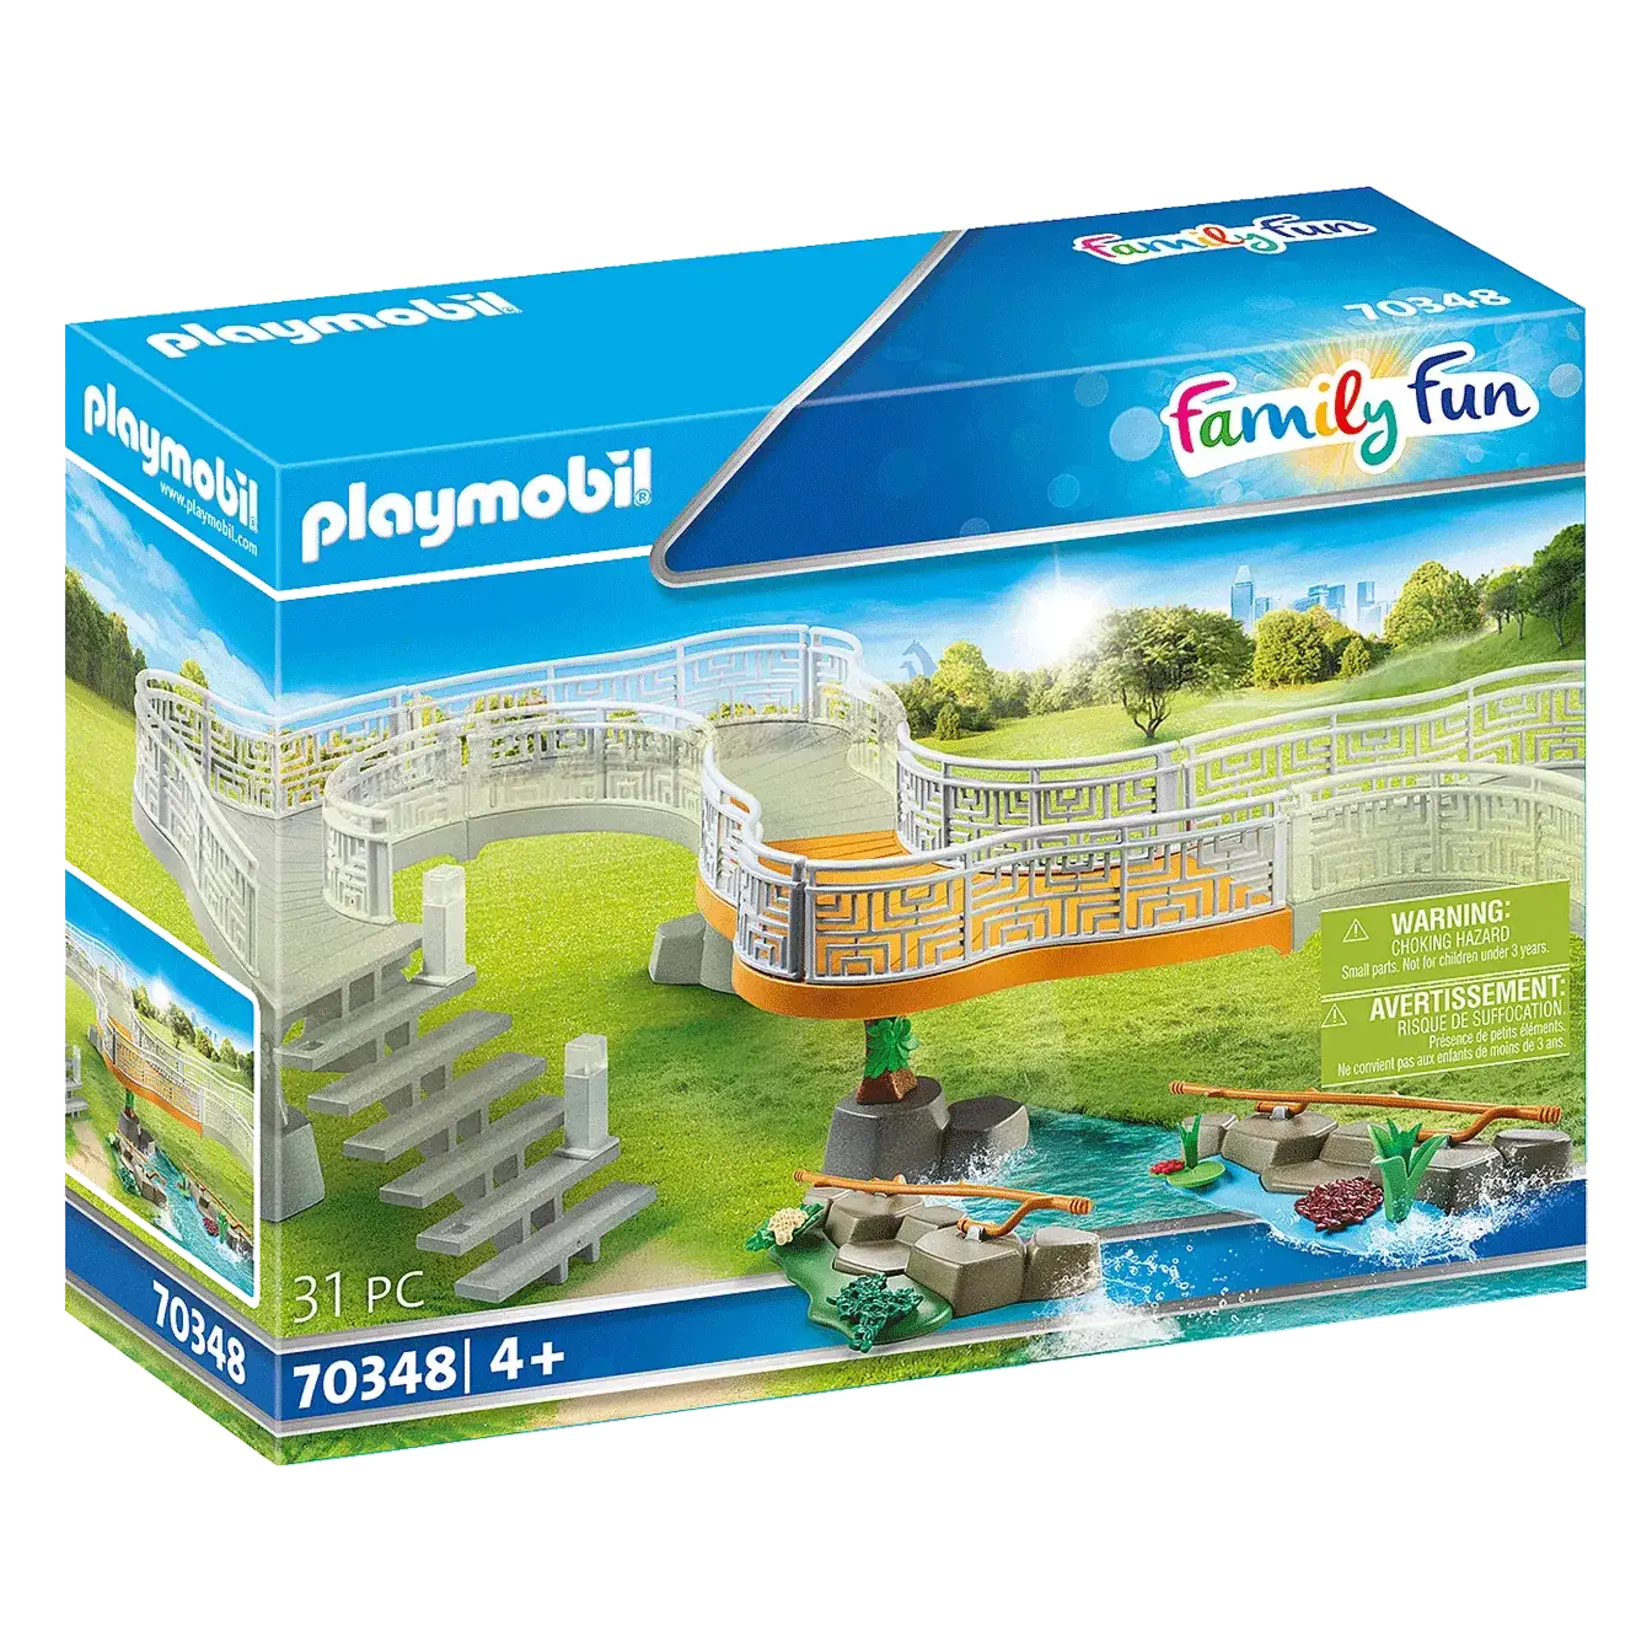 Playmobil Playmobil Family Fun 70348 - Extention pour parc animalier